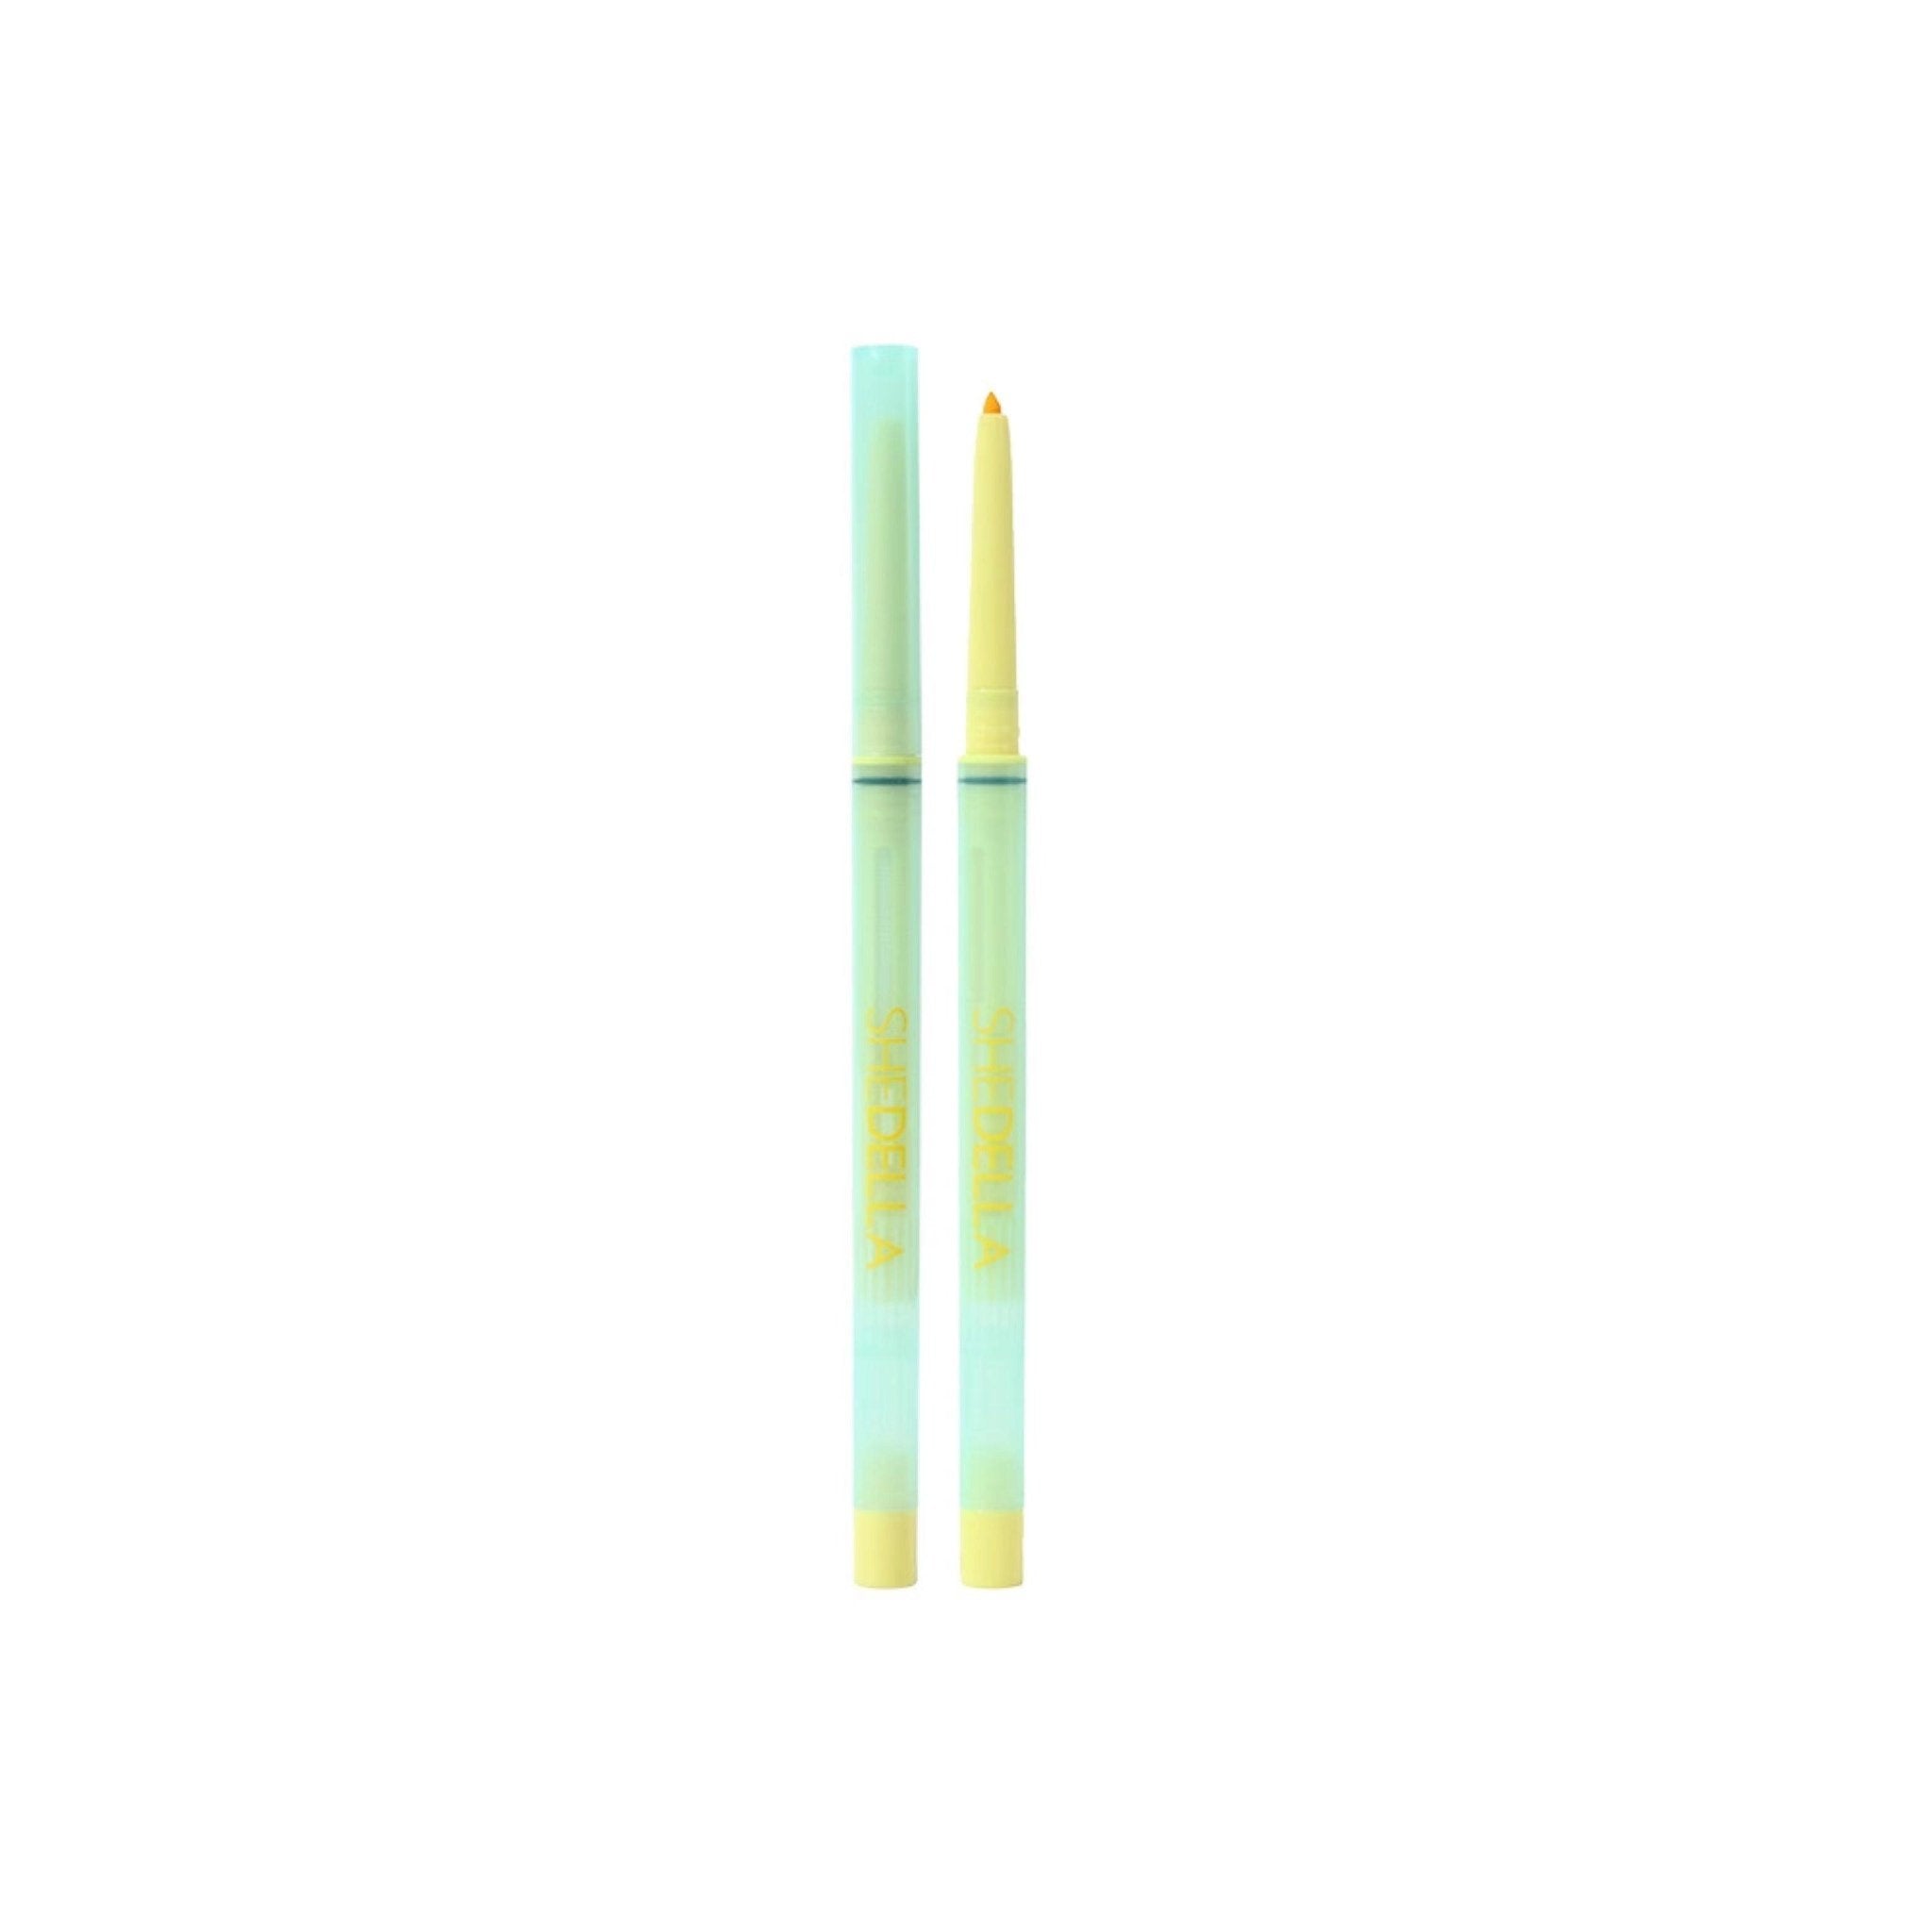 Shedella TEC Crayon Silkworm Pen SDL04 - Chic Decent